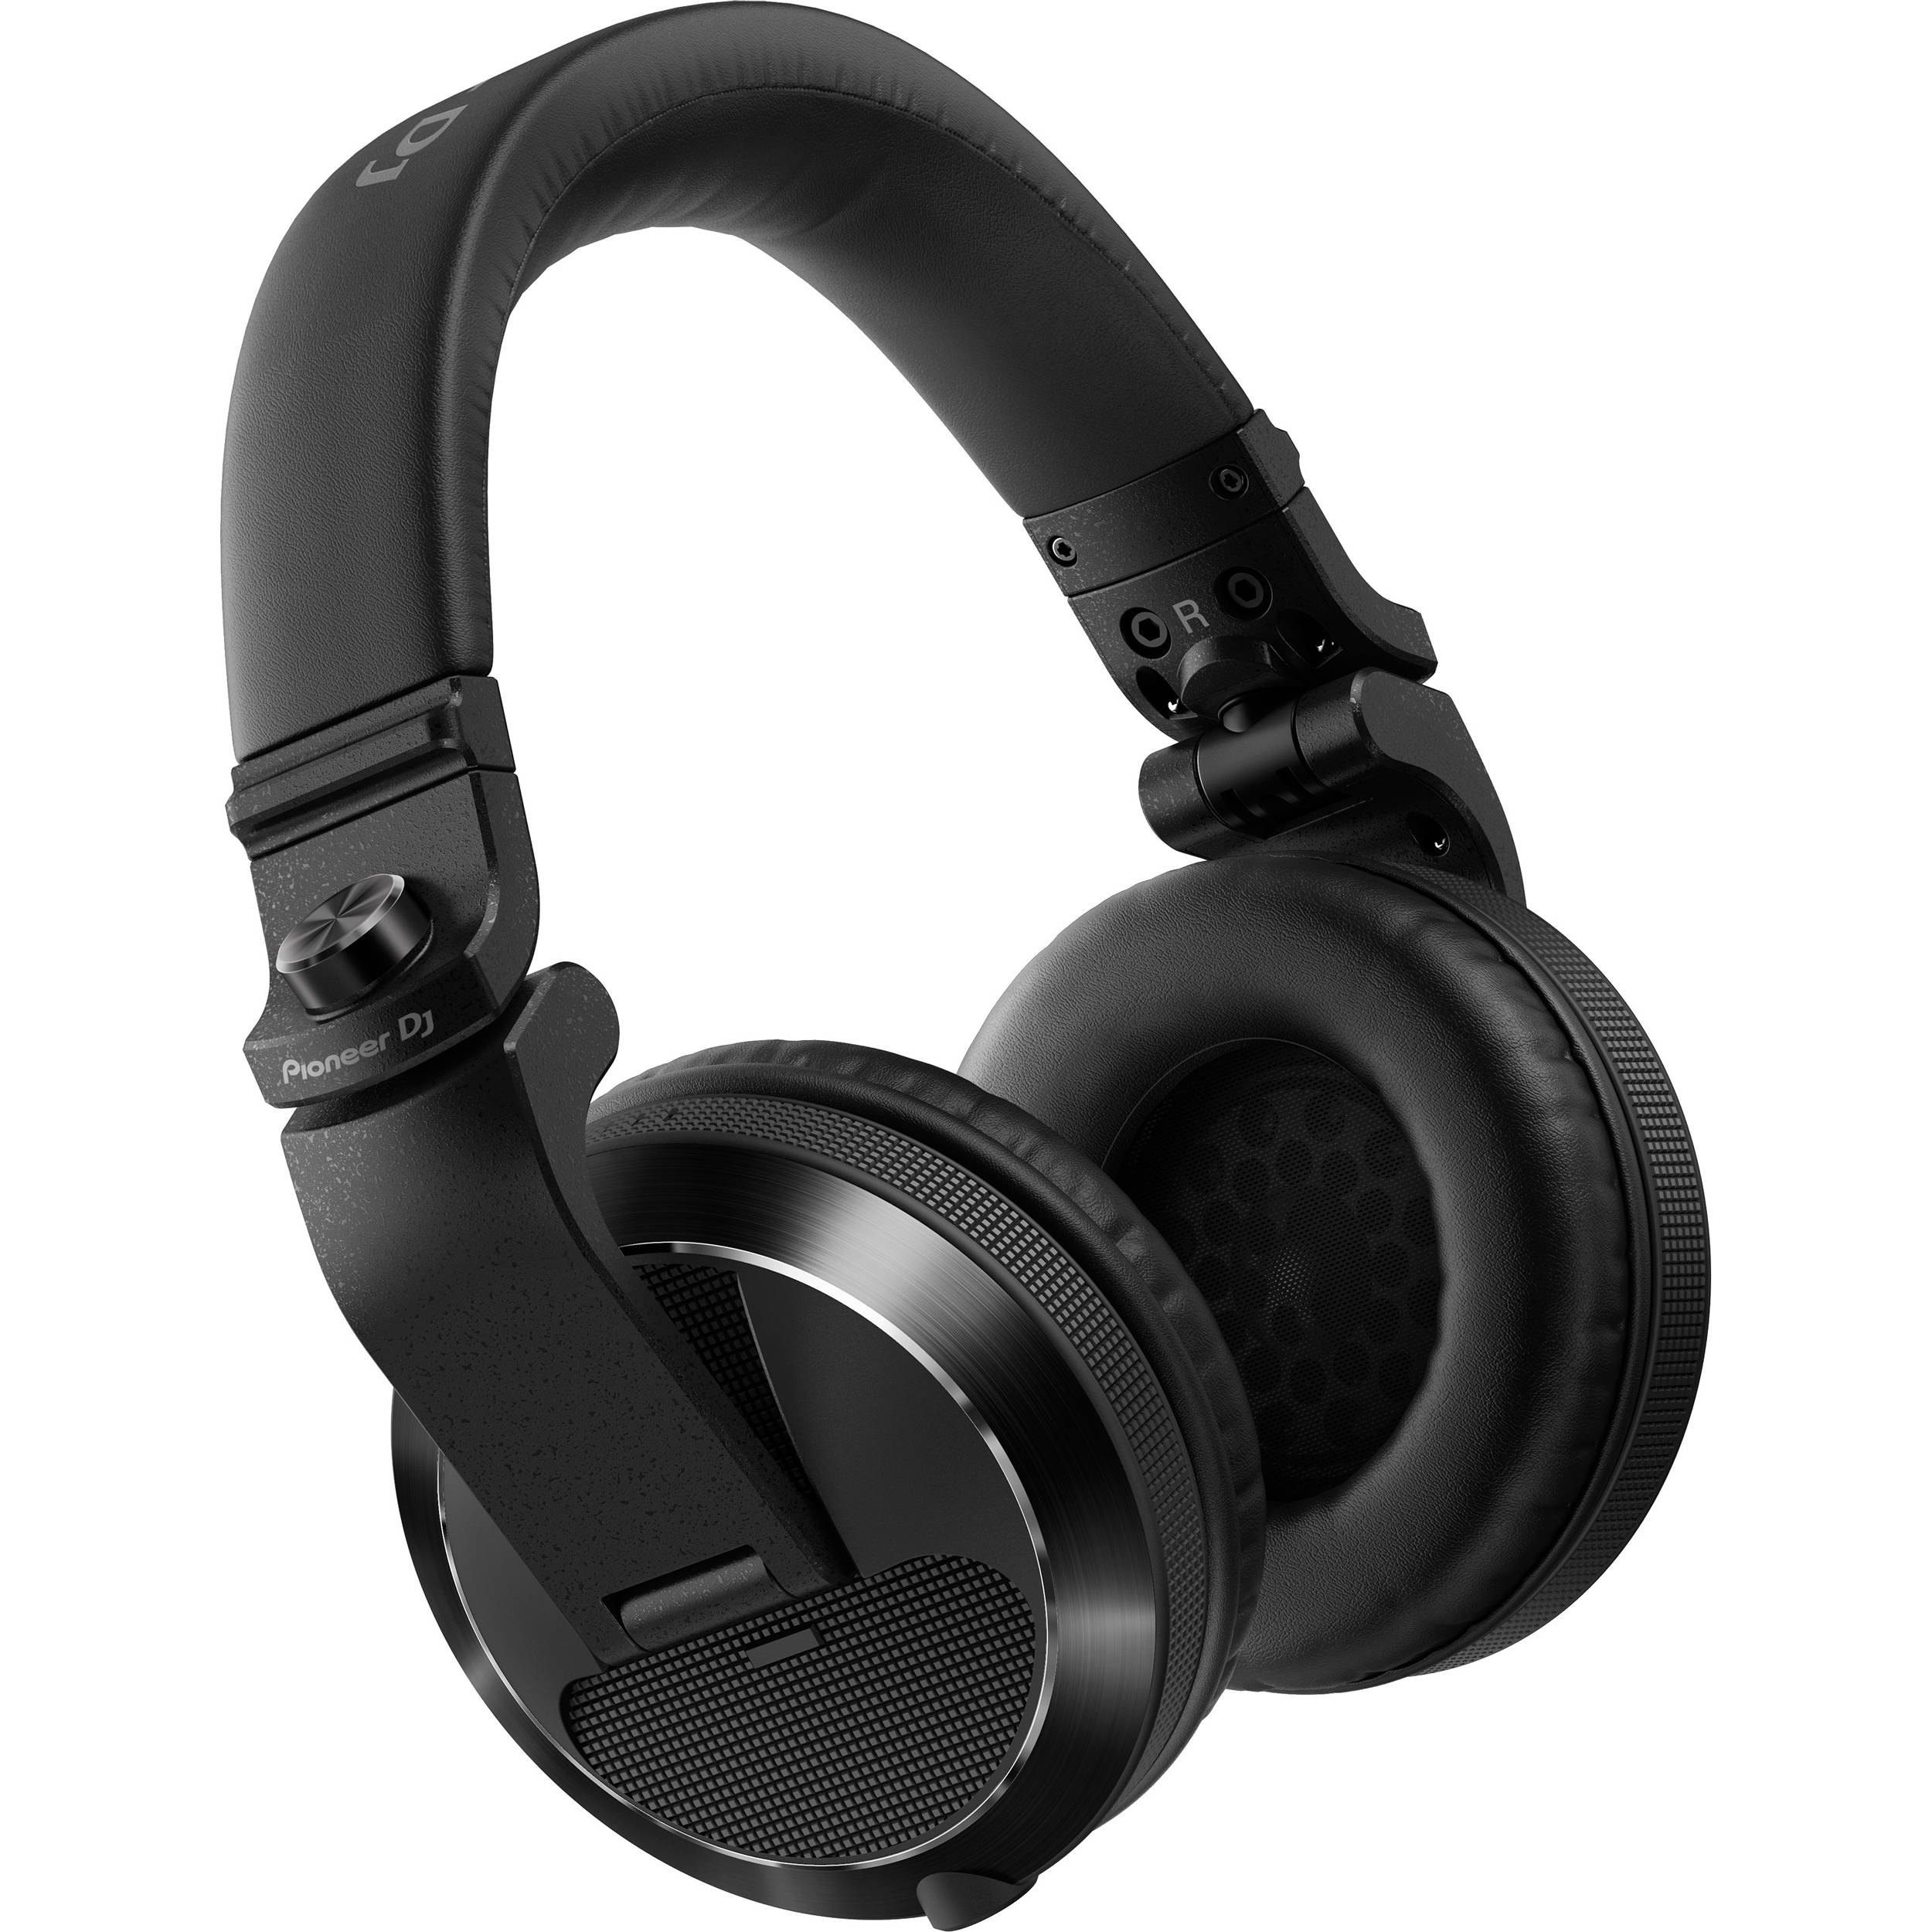 Black Pioneer DJ HDJ-X7 headphone